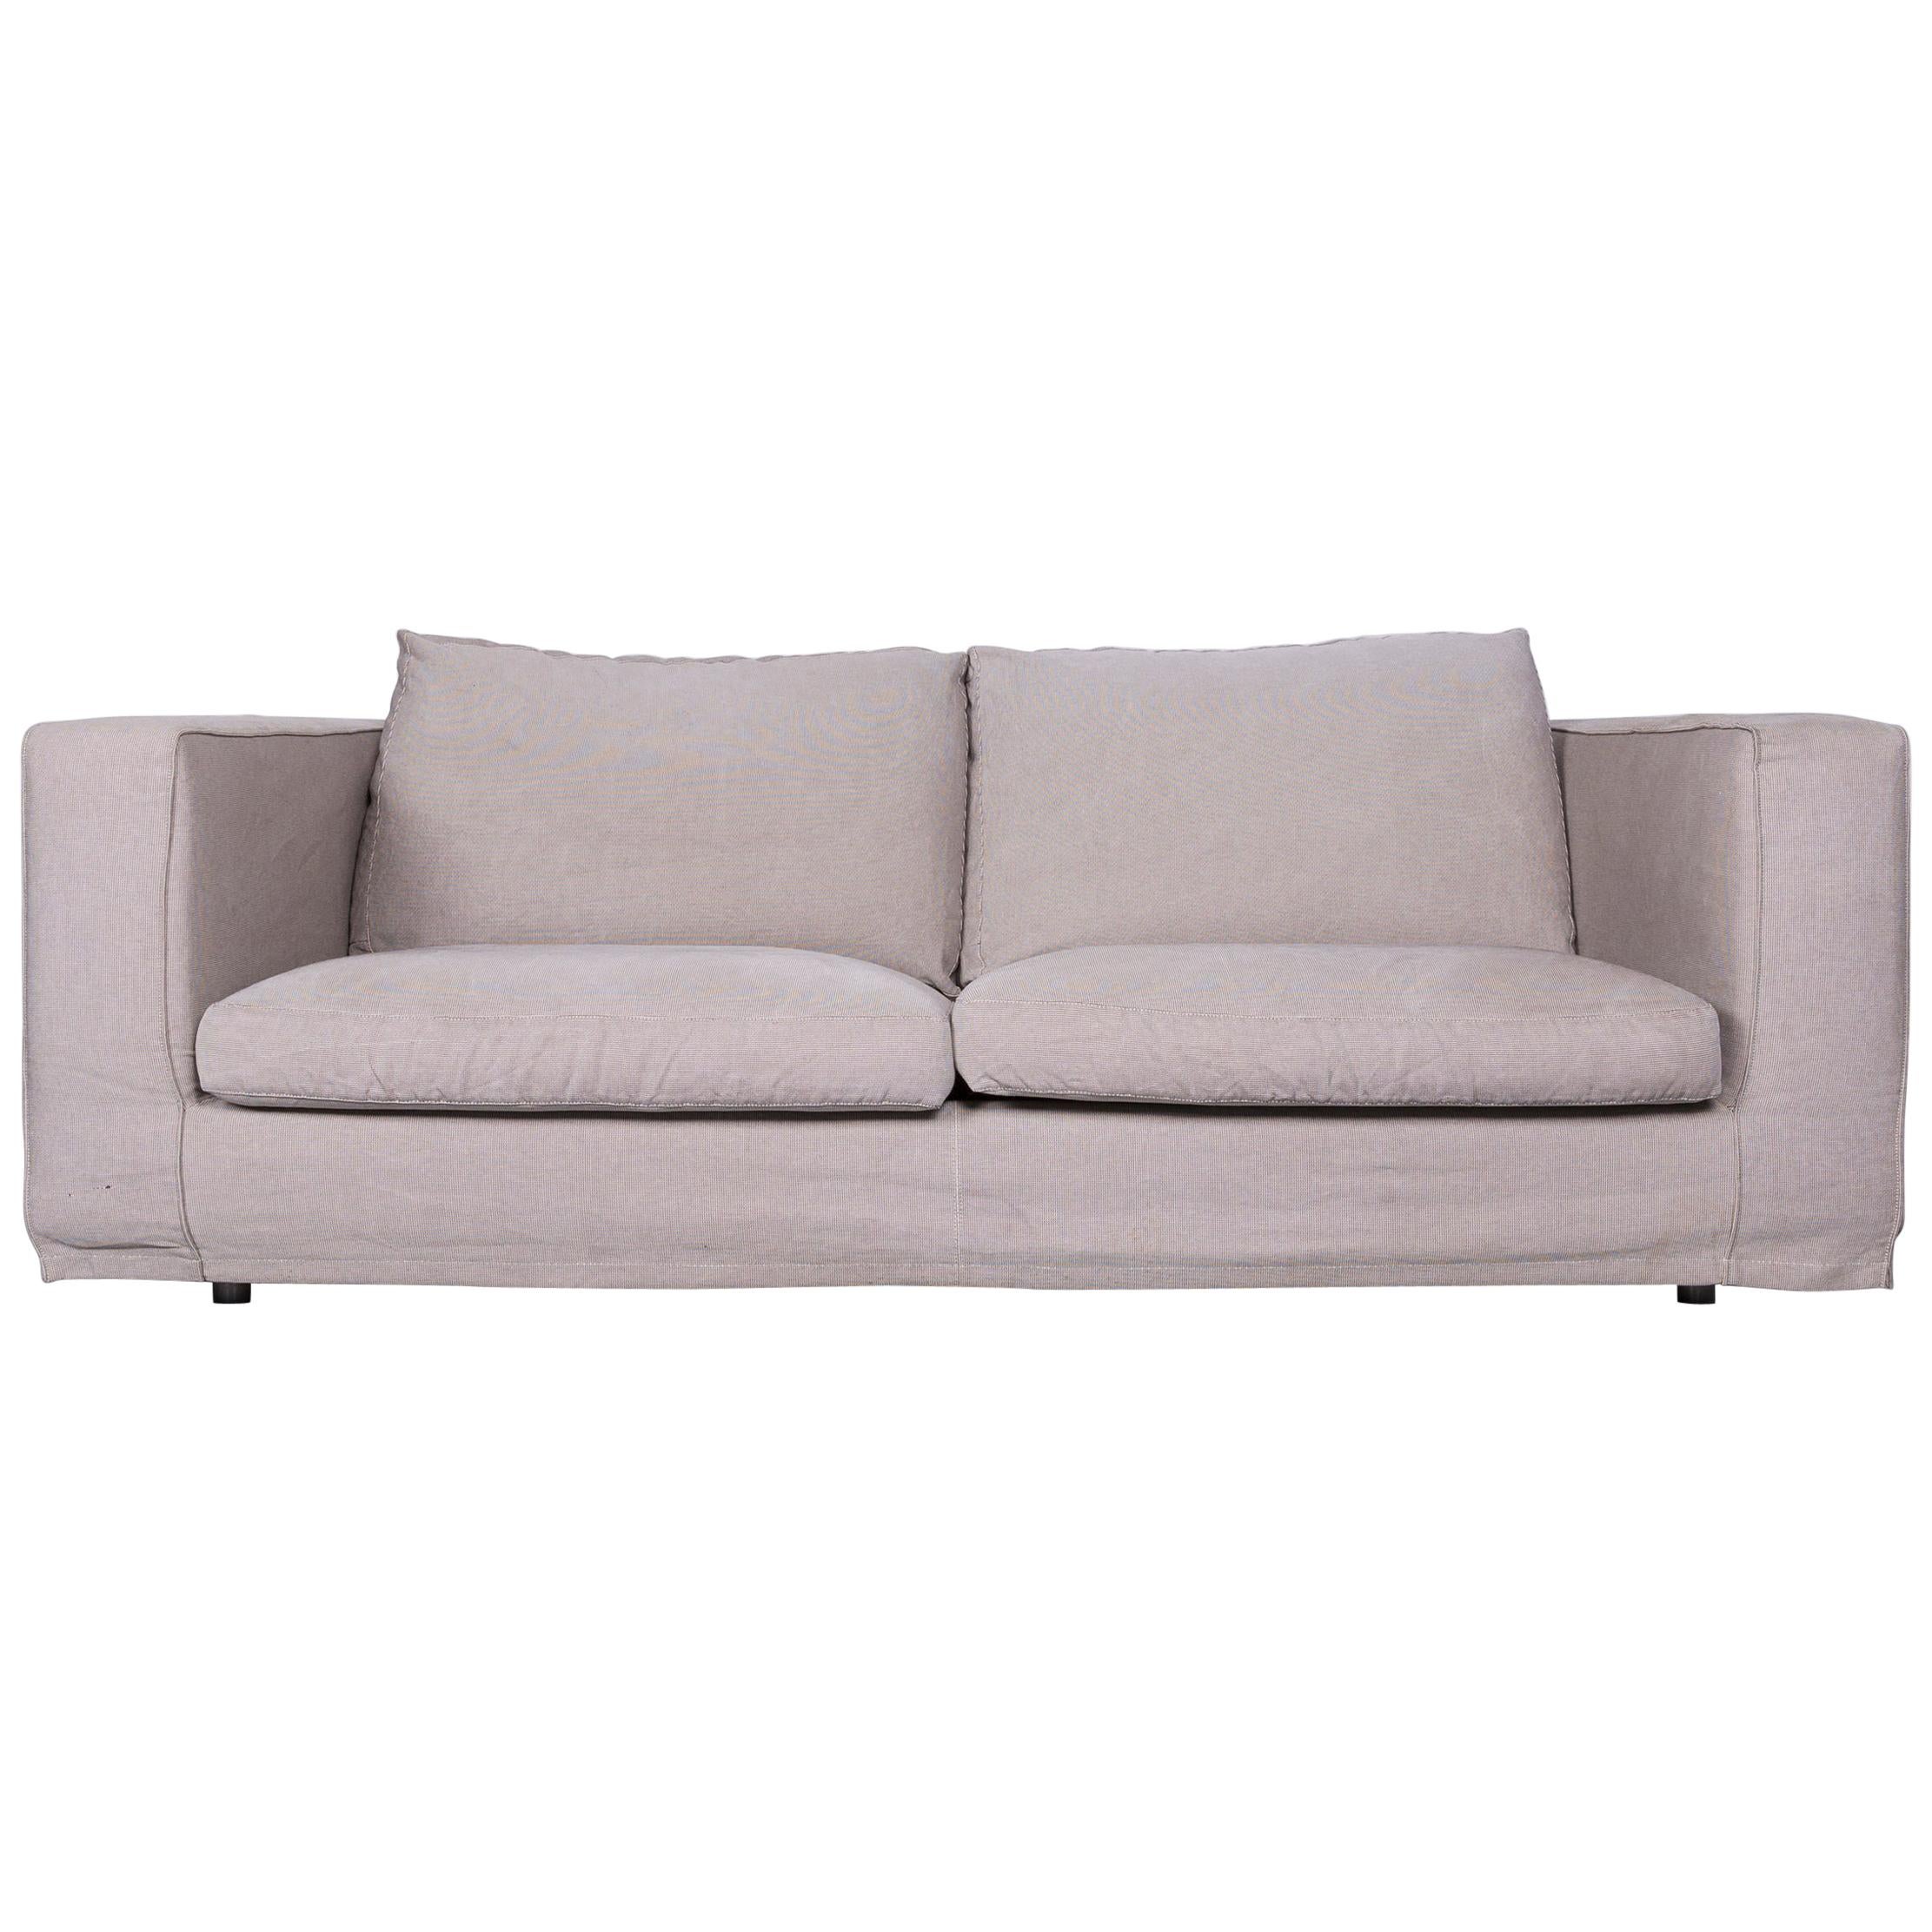 B&B Italia Basiko Fabric Sofa Grey Two-Seat Couch For Sale